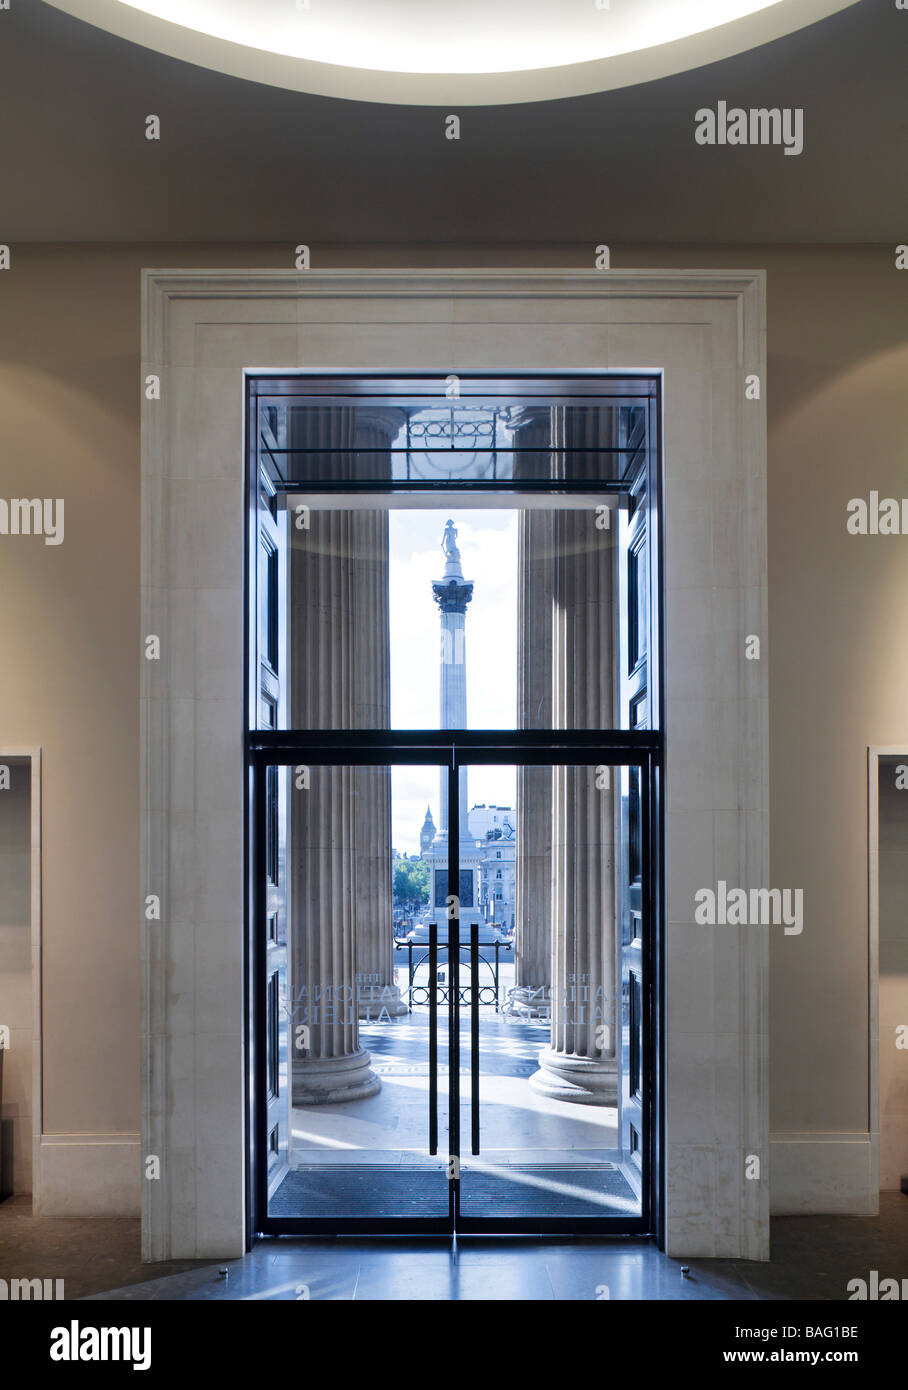 Nationale Galerie Main Eingang, London, Vereinigtes Königreich, Dixon Jones Ltd, Nationalgalerie Haupteingang Portikus Eingangstüren Stockfoto